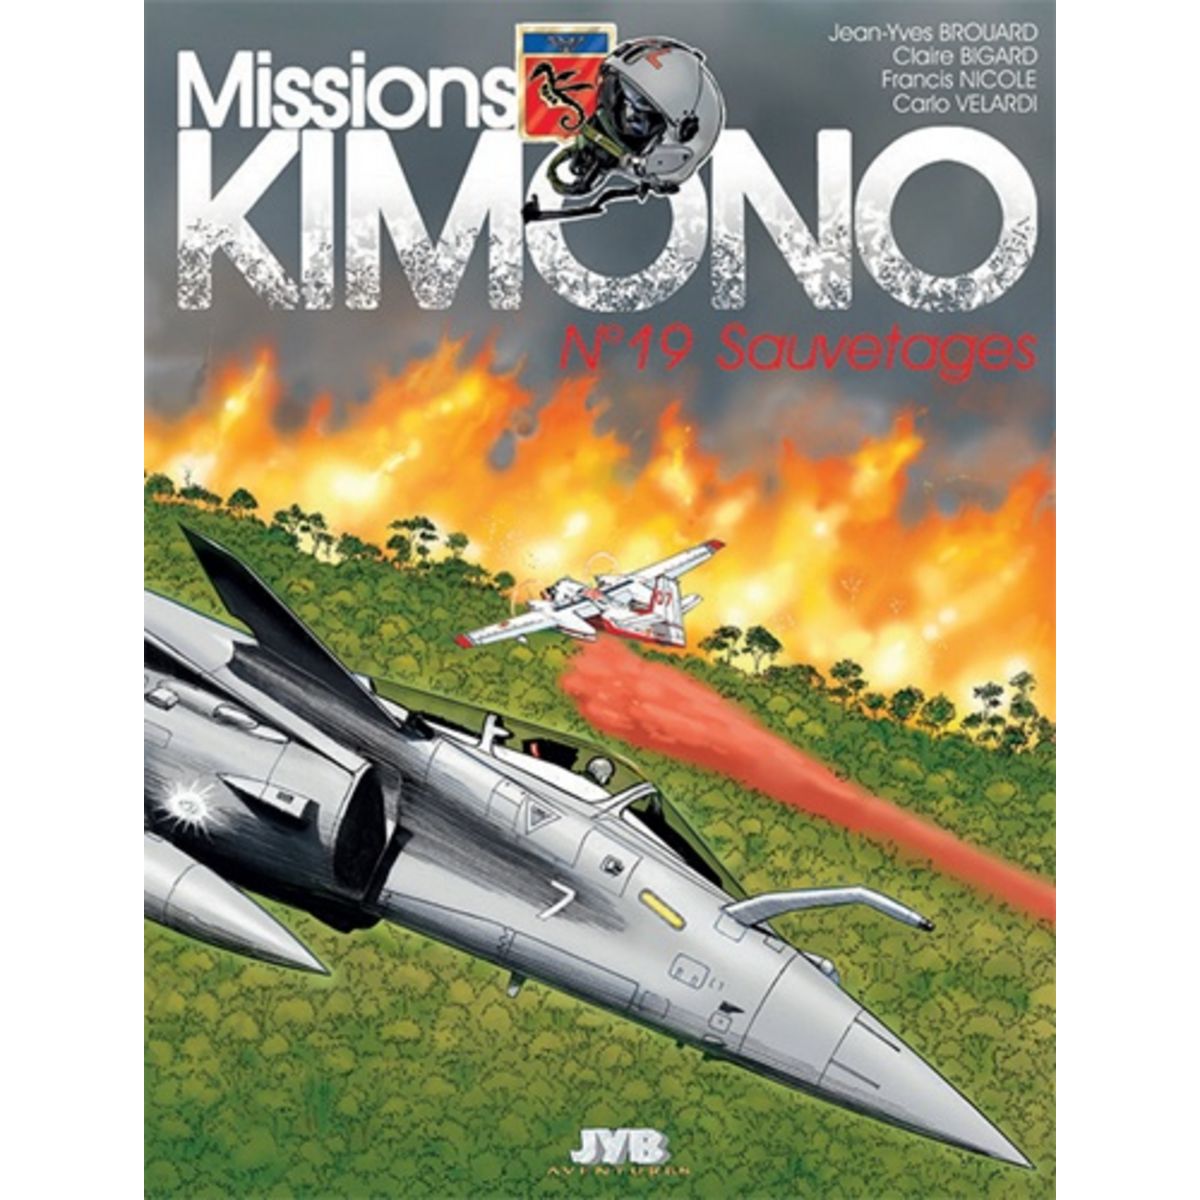  MISSIONS KIMONO TOME 19 : SAUVETAGES, Brouard Jean-Yves